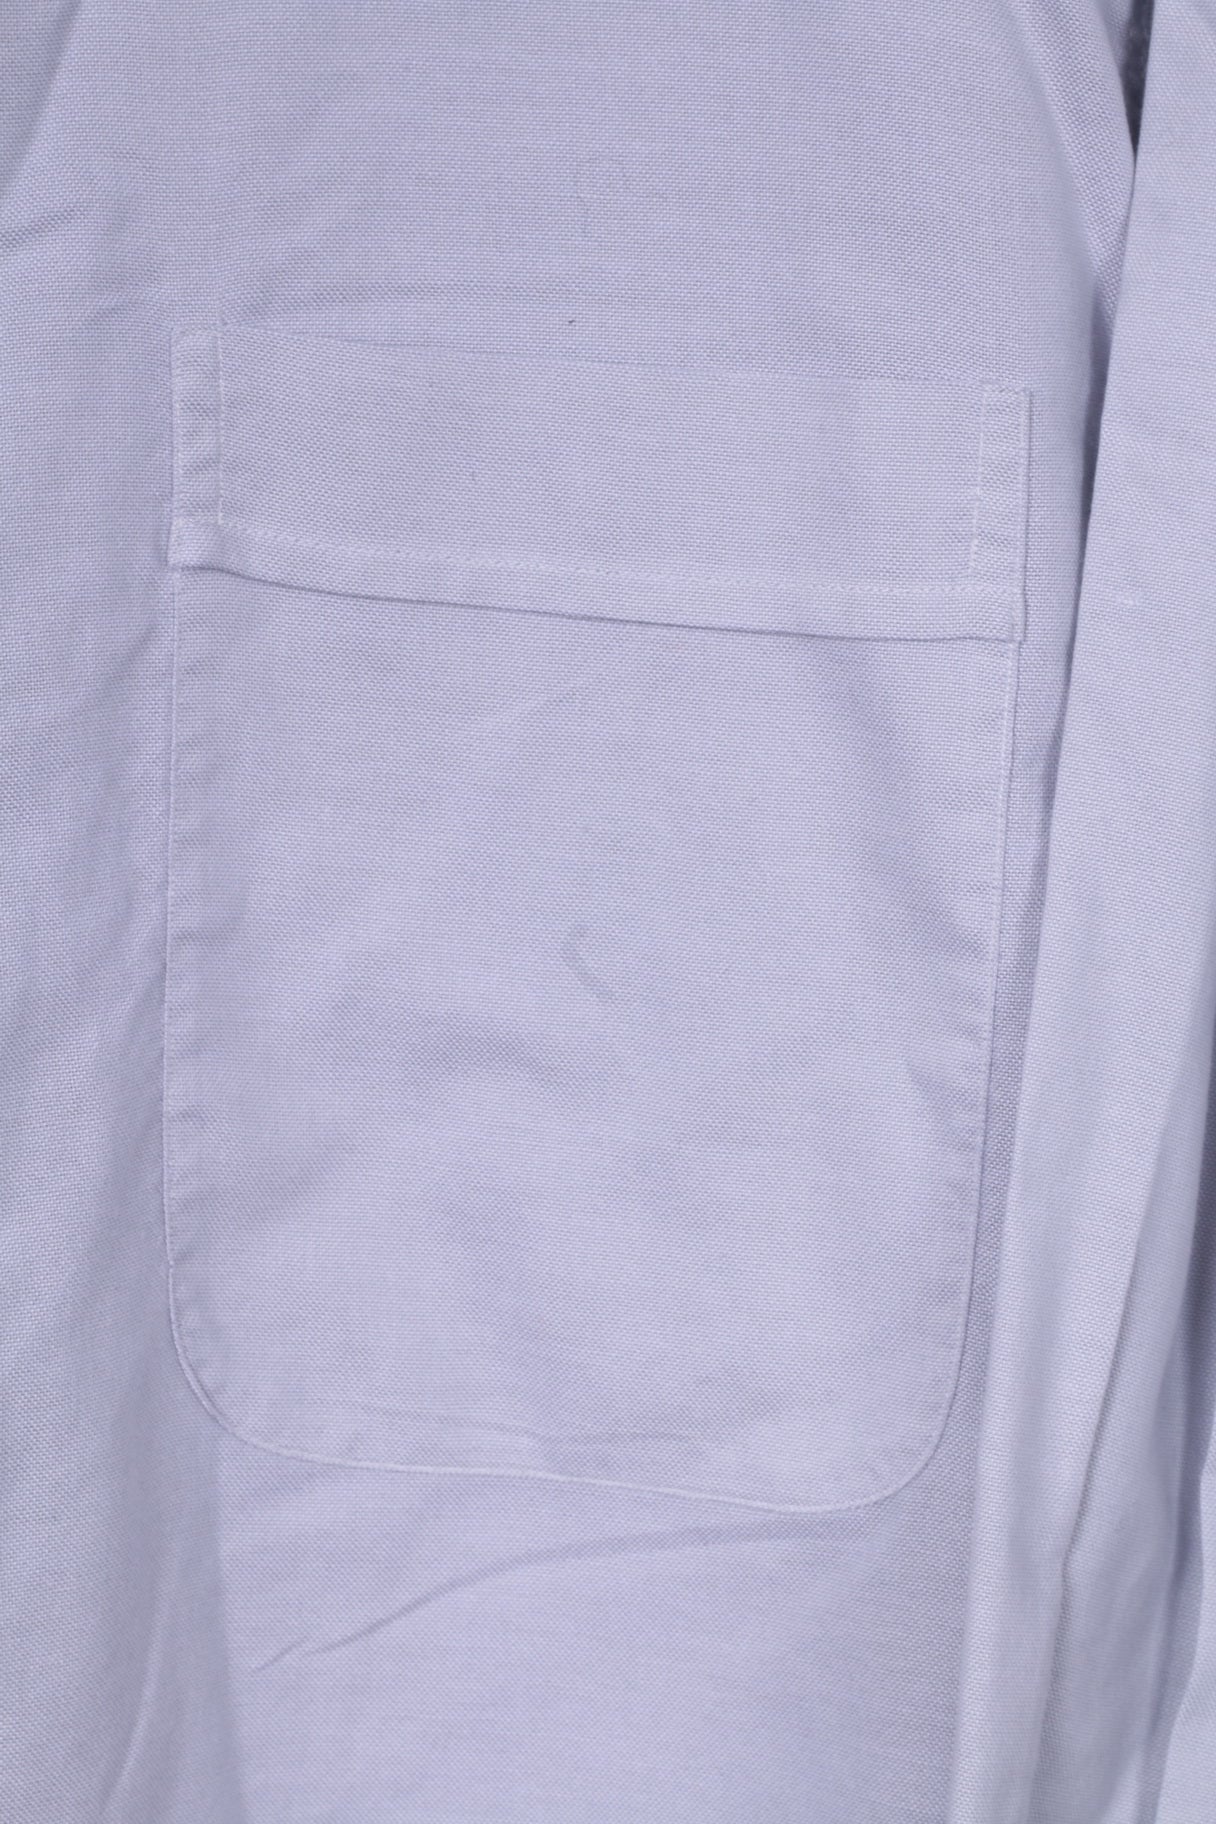 Jaeger Mens L Casual Shirt Blue Button Down Collar Long Sleeve